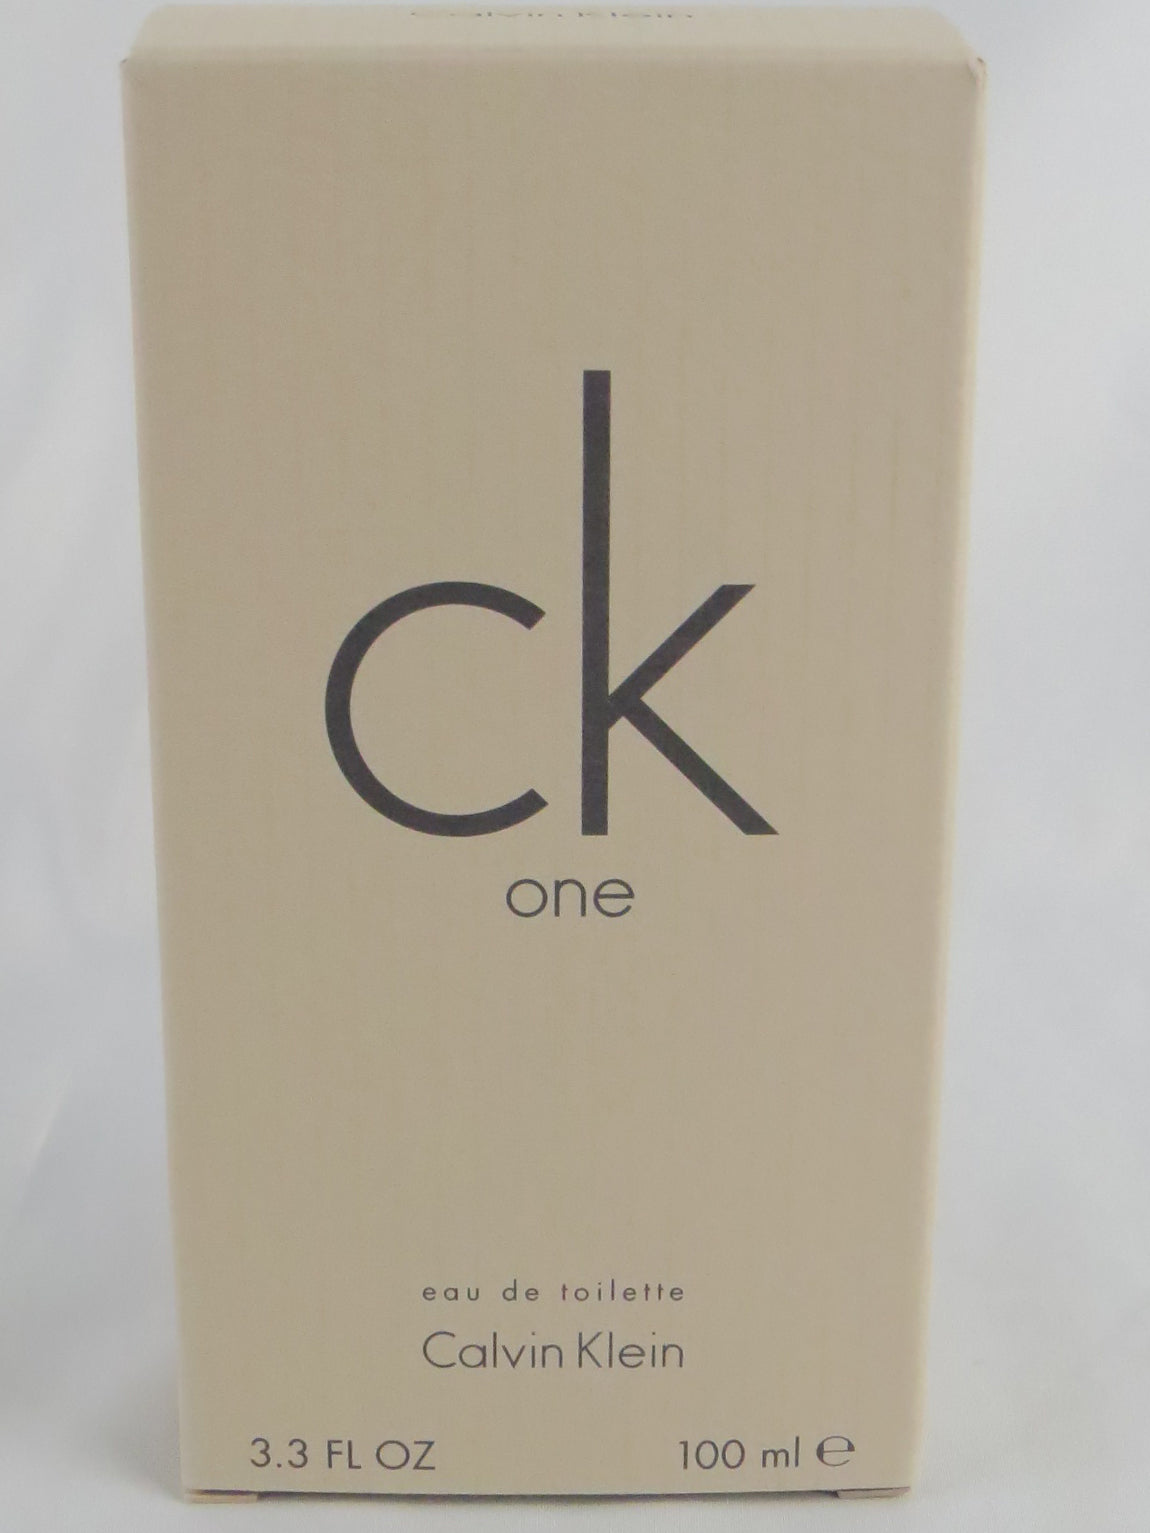 Perfume CK ONE by Calvin Klein 3.4 oz Eau De Toilette Spray (Unisex)  for Women - Banachief Outlet